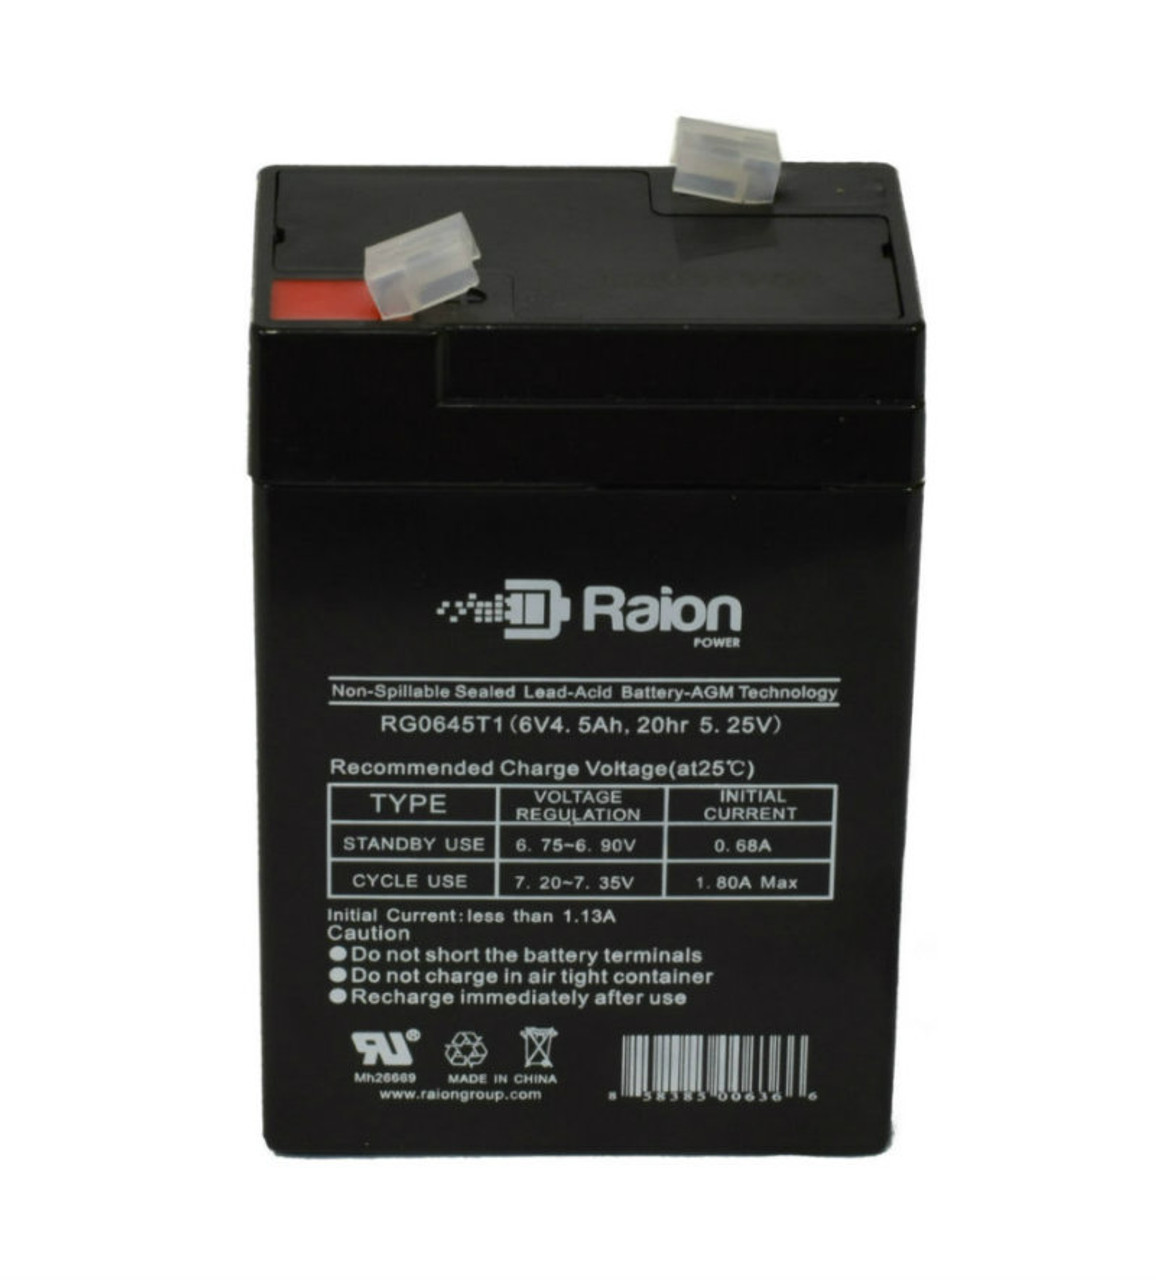 Raion Power RG0645T1 Replacement Battery Cartridge for Viasys Healthcare Avian Portable Ventilator - 15365